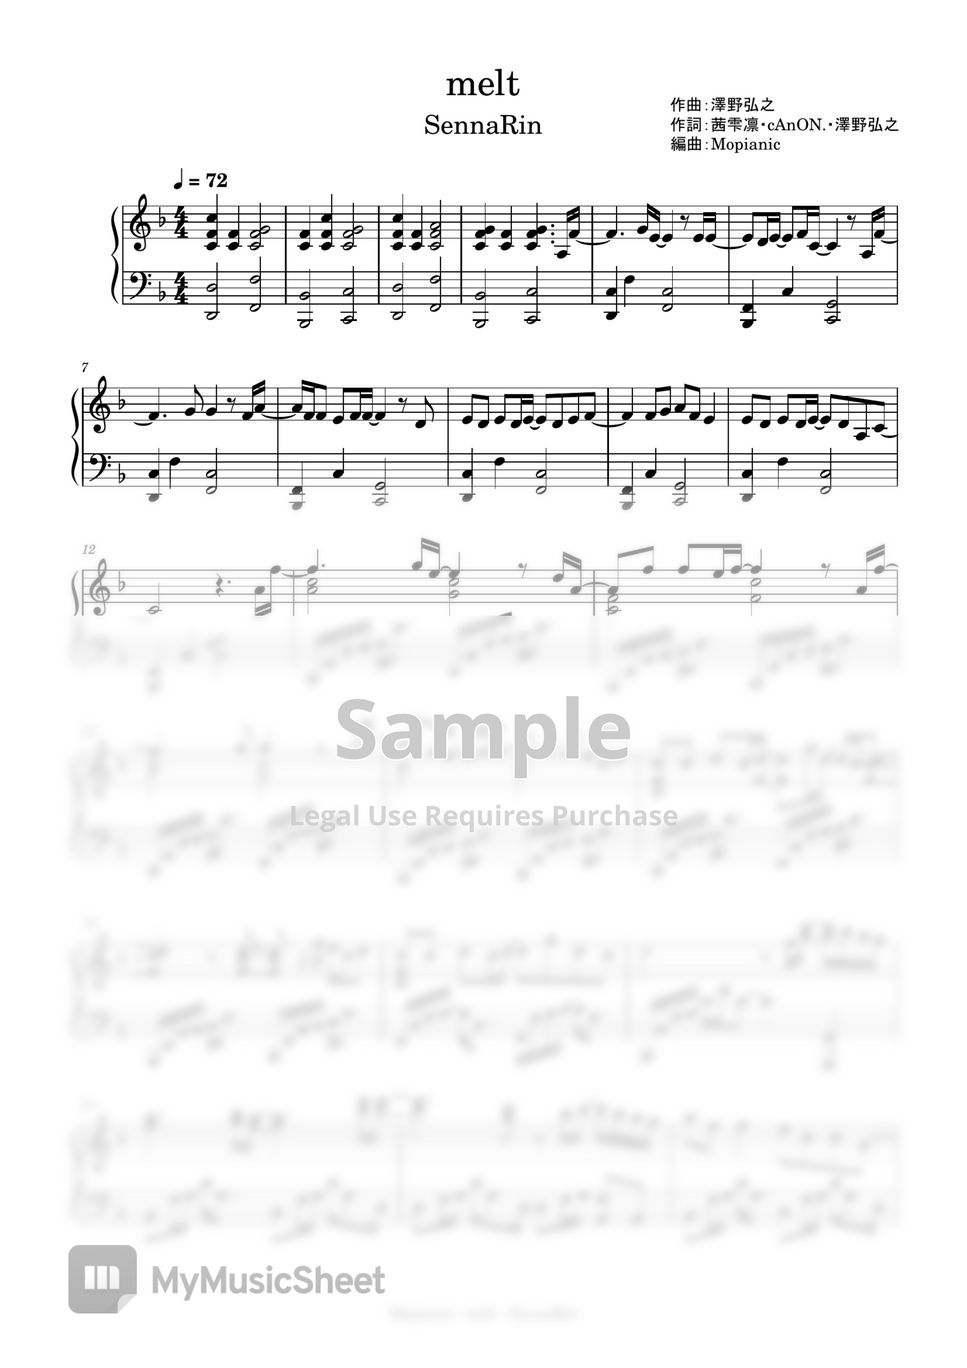 SennaRin - melt (intermediate, piano) by Mopianic